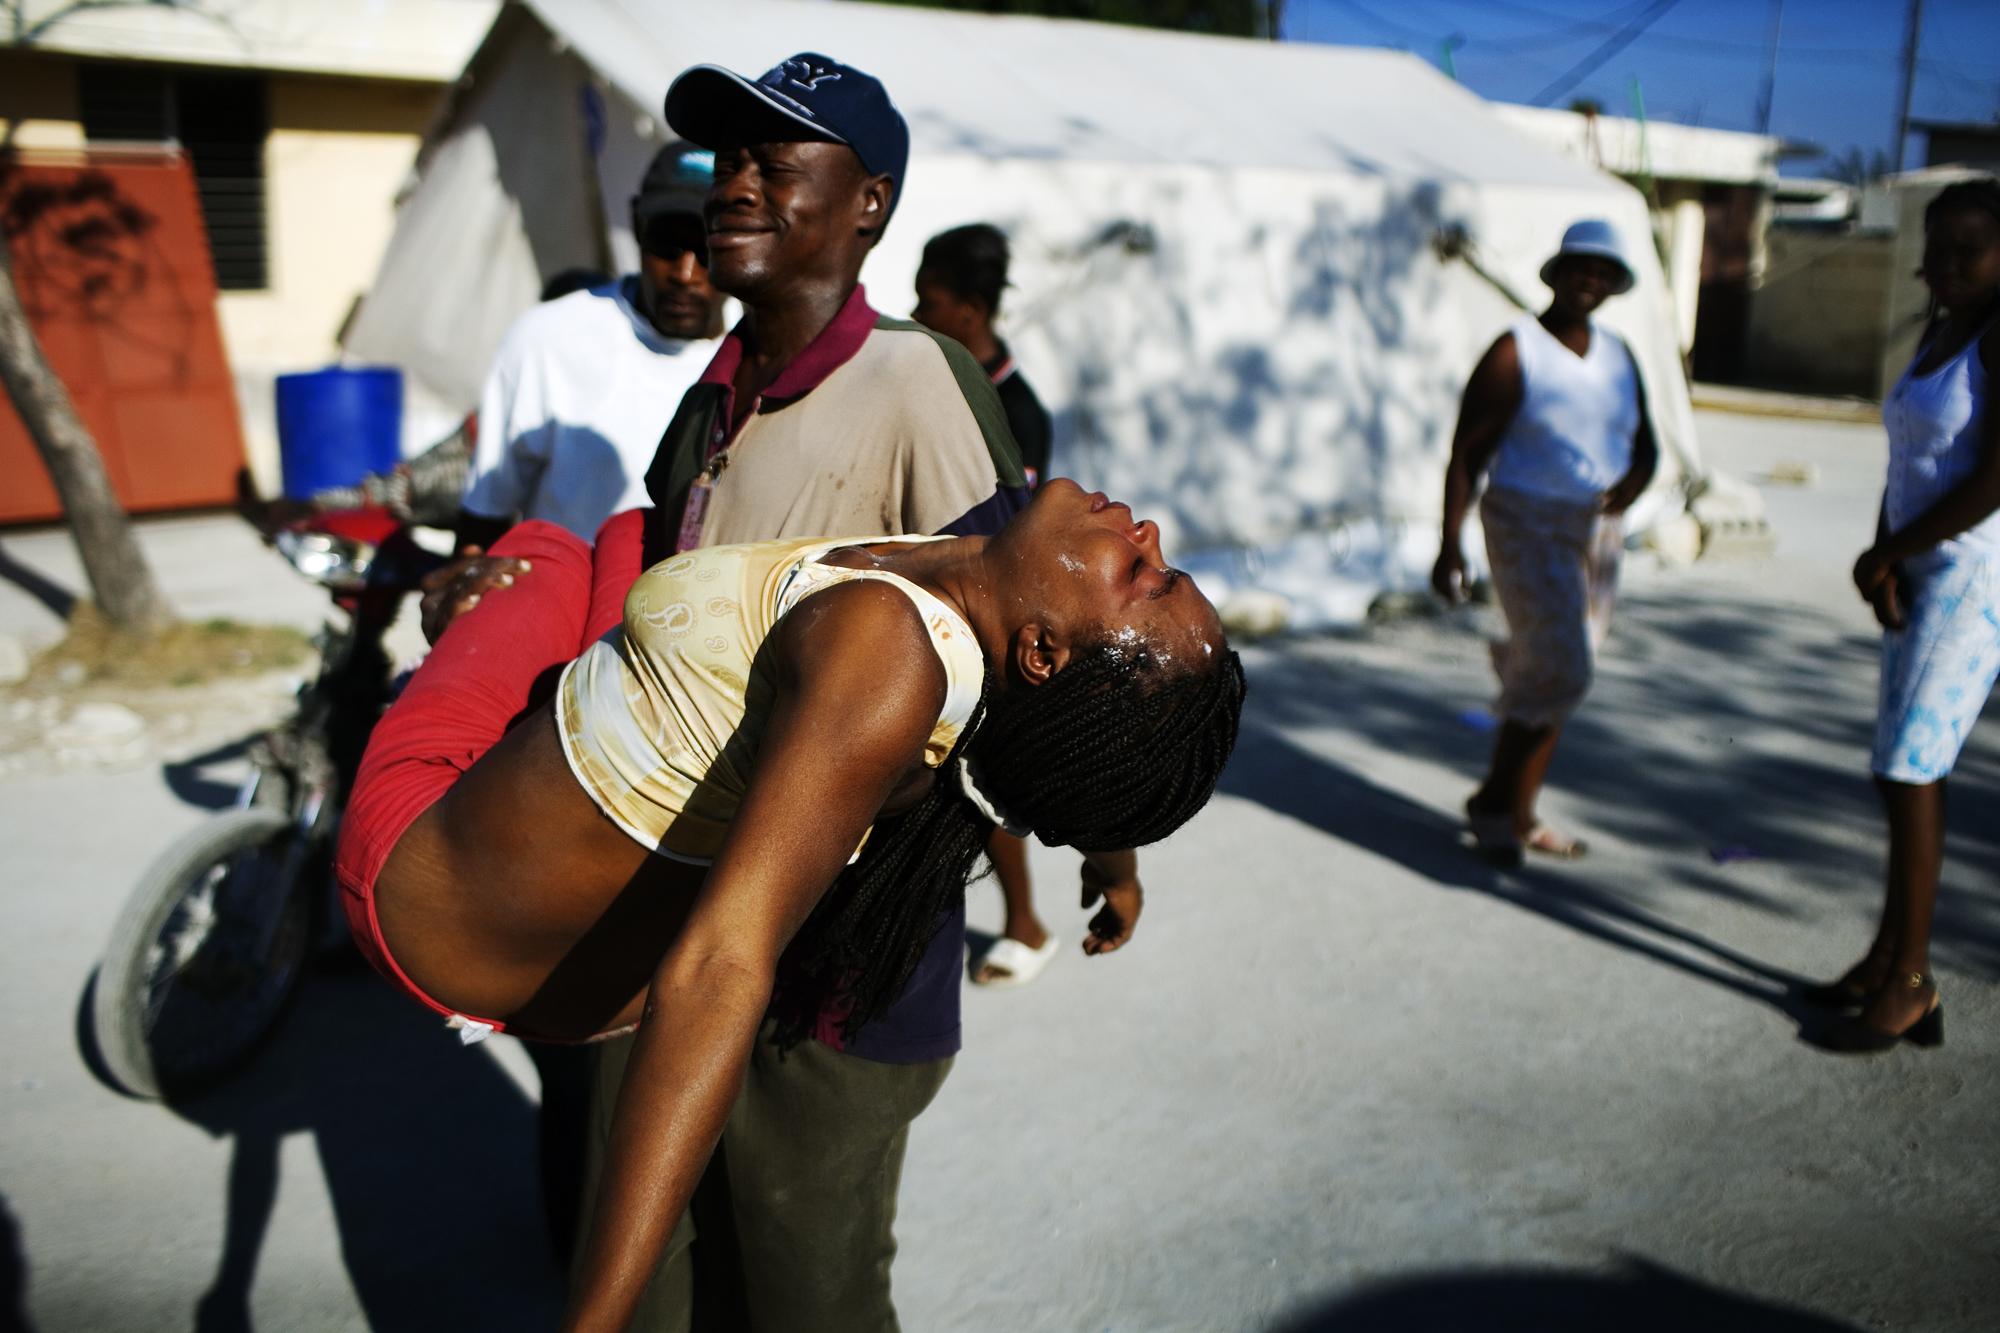 Haiti for MSF - HAITI Cite Soleil, Port-au-Prince
A woman affected by...